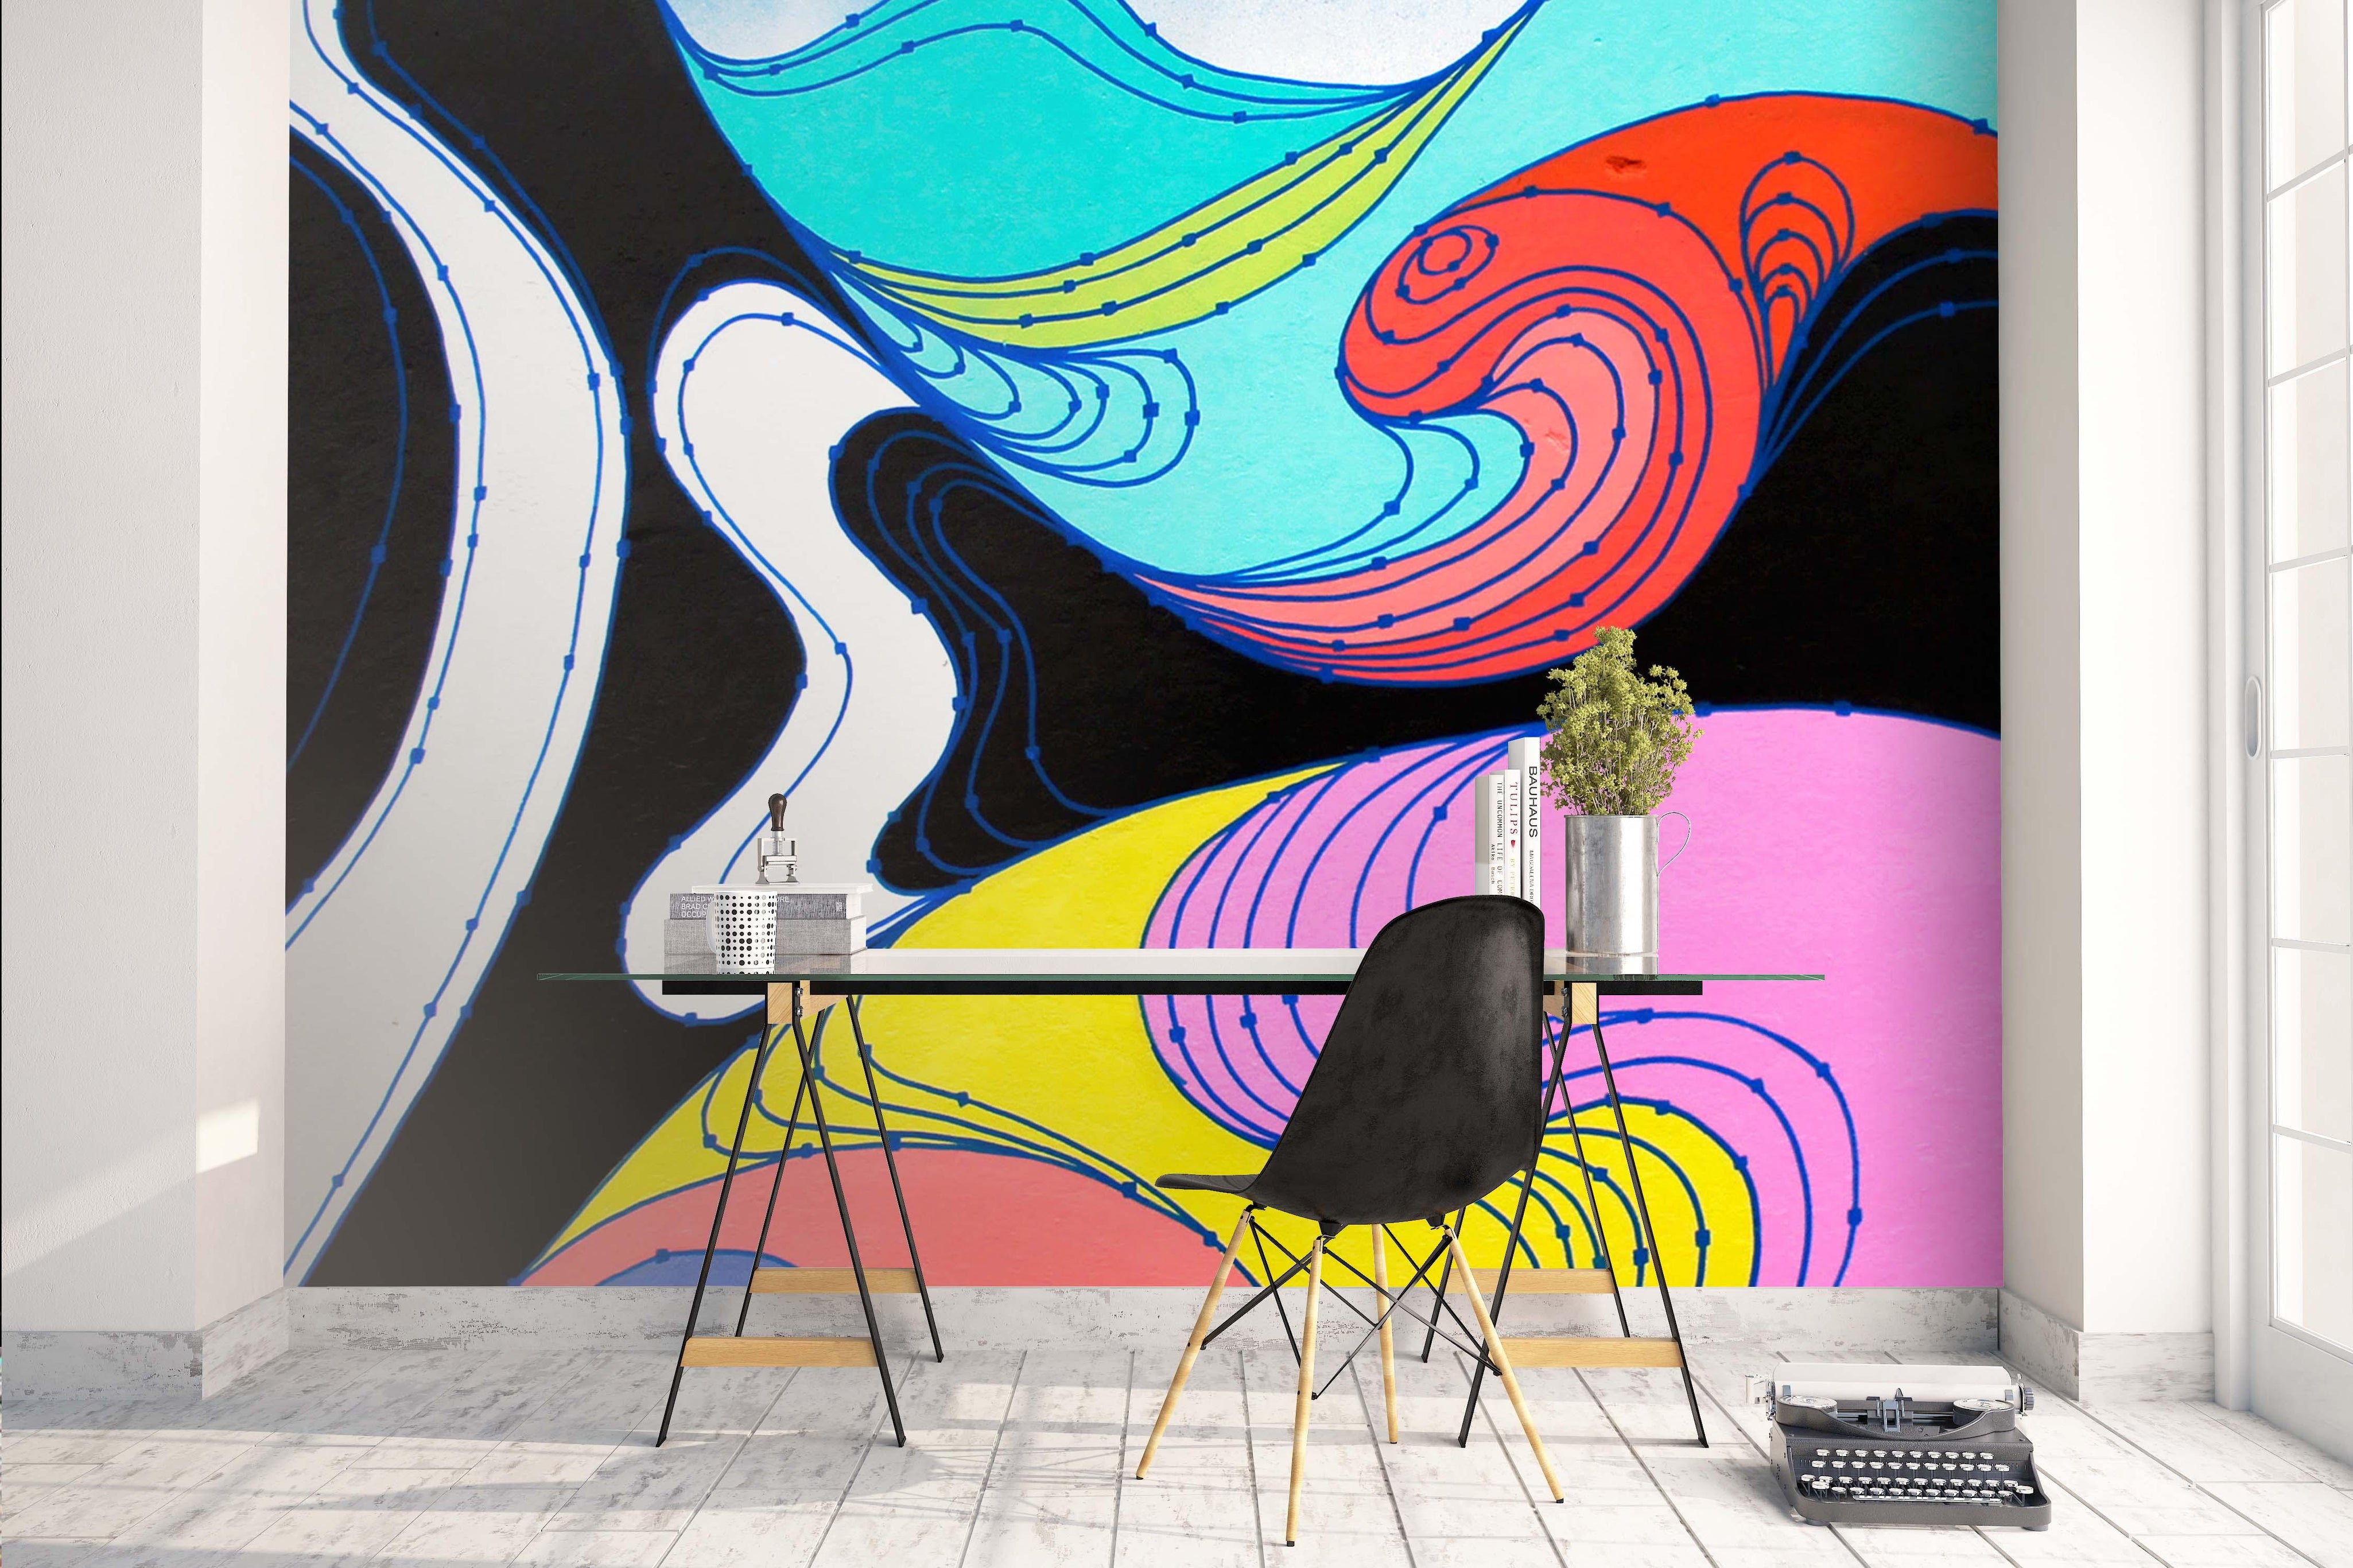 3D Abstract Colorful Graffiti Wall Mural Wallpaper 285- Jess Art Decoration